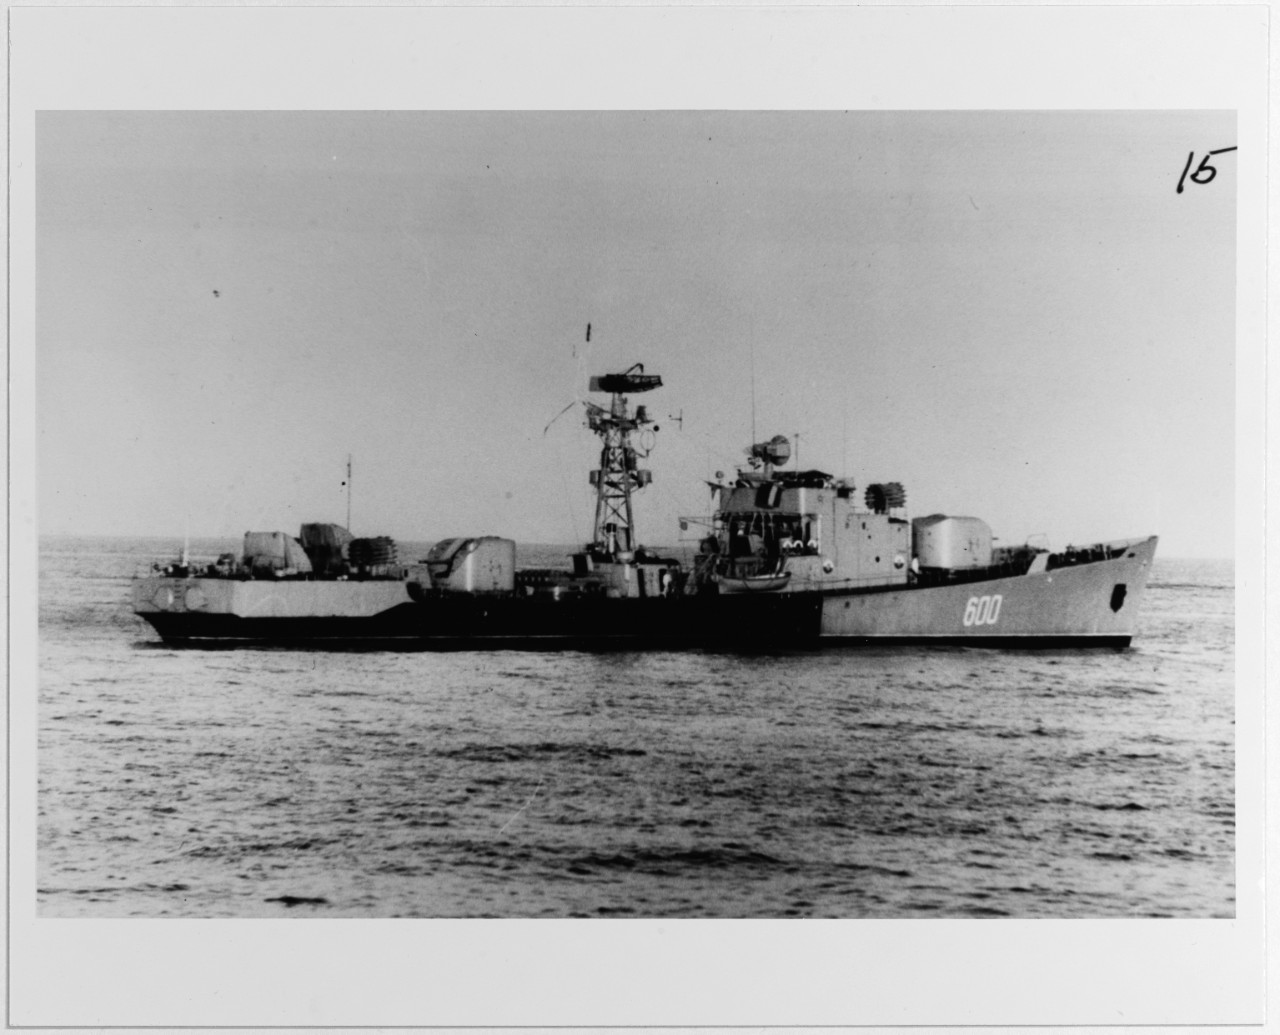 Mirka-class ocean escort